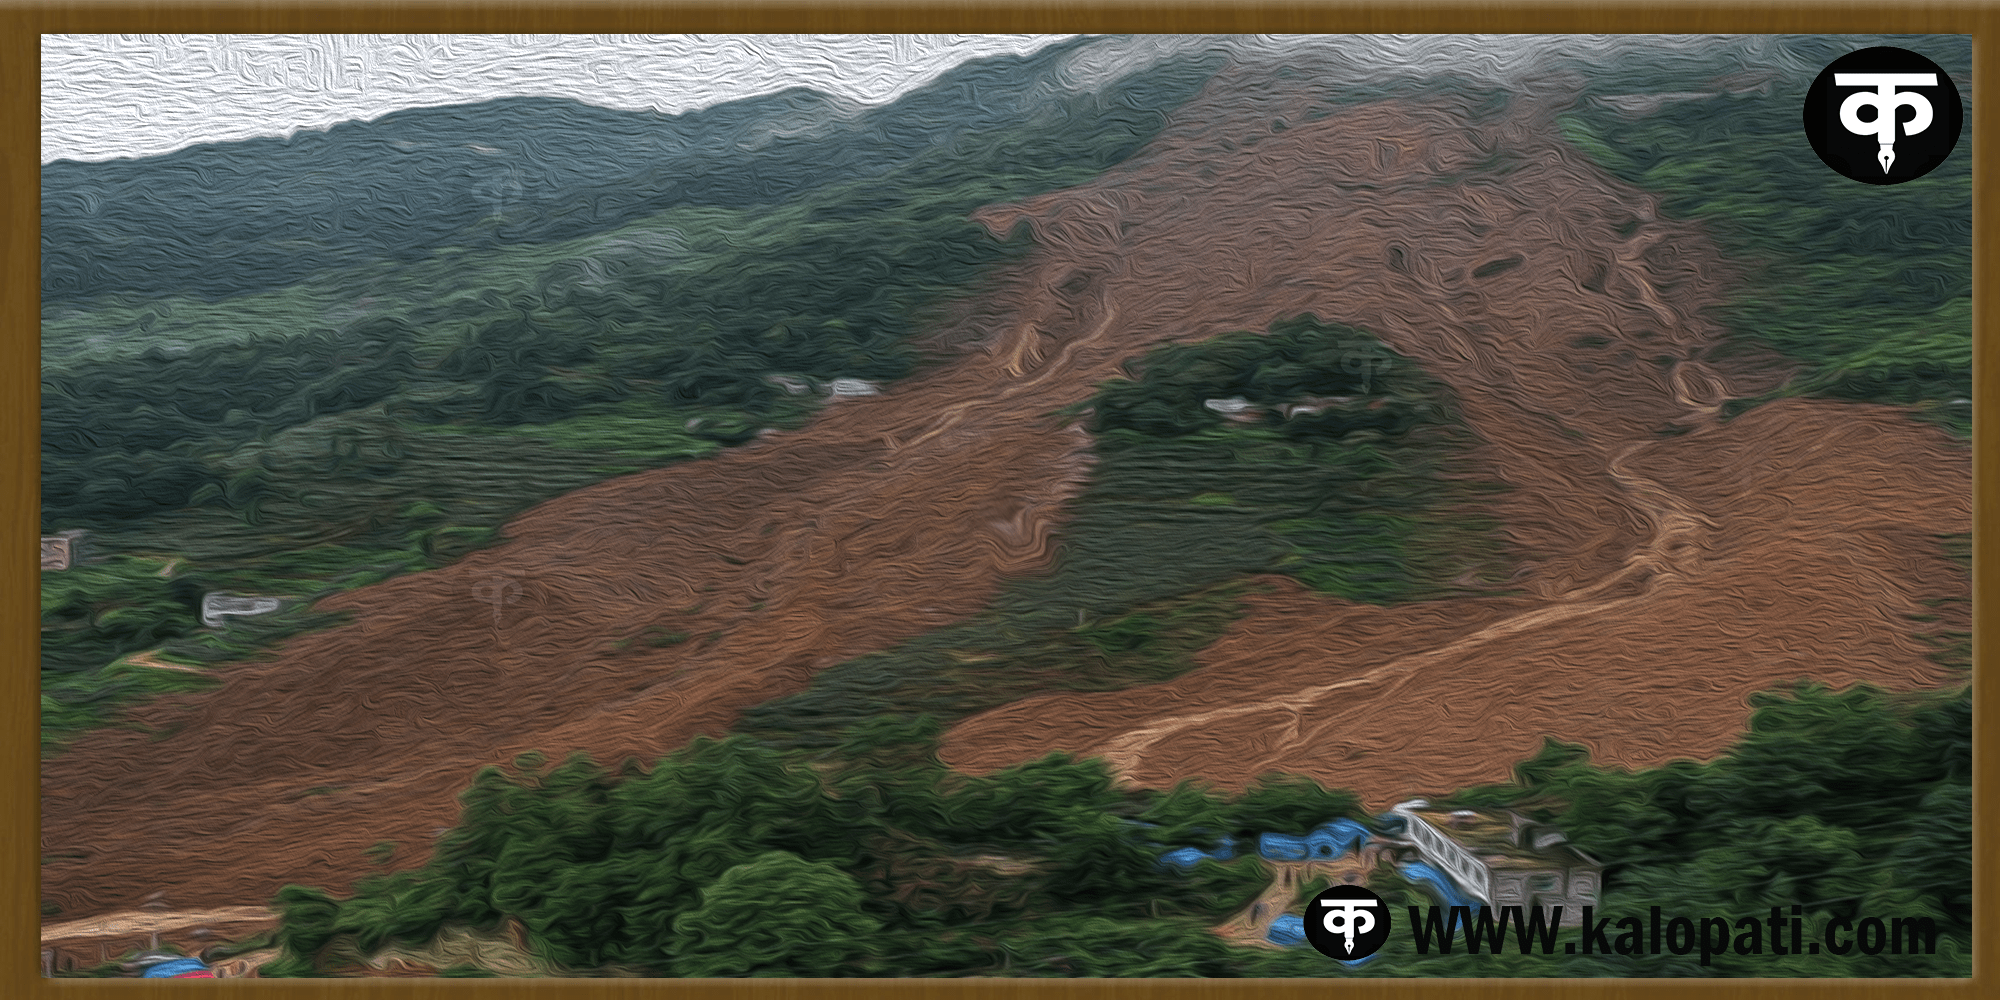 landslide, pahiro